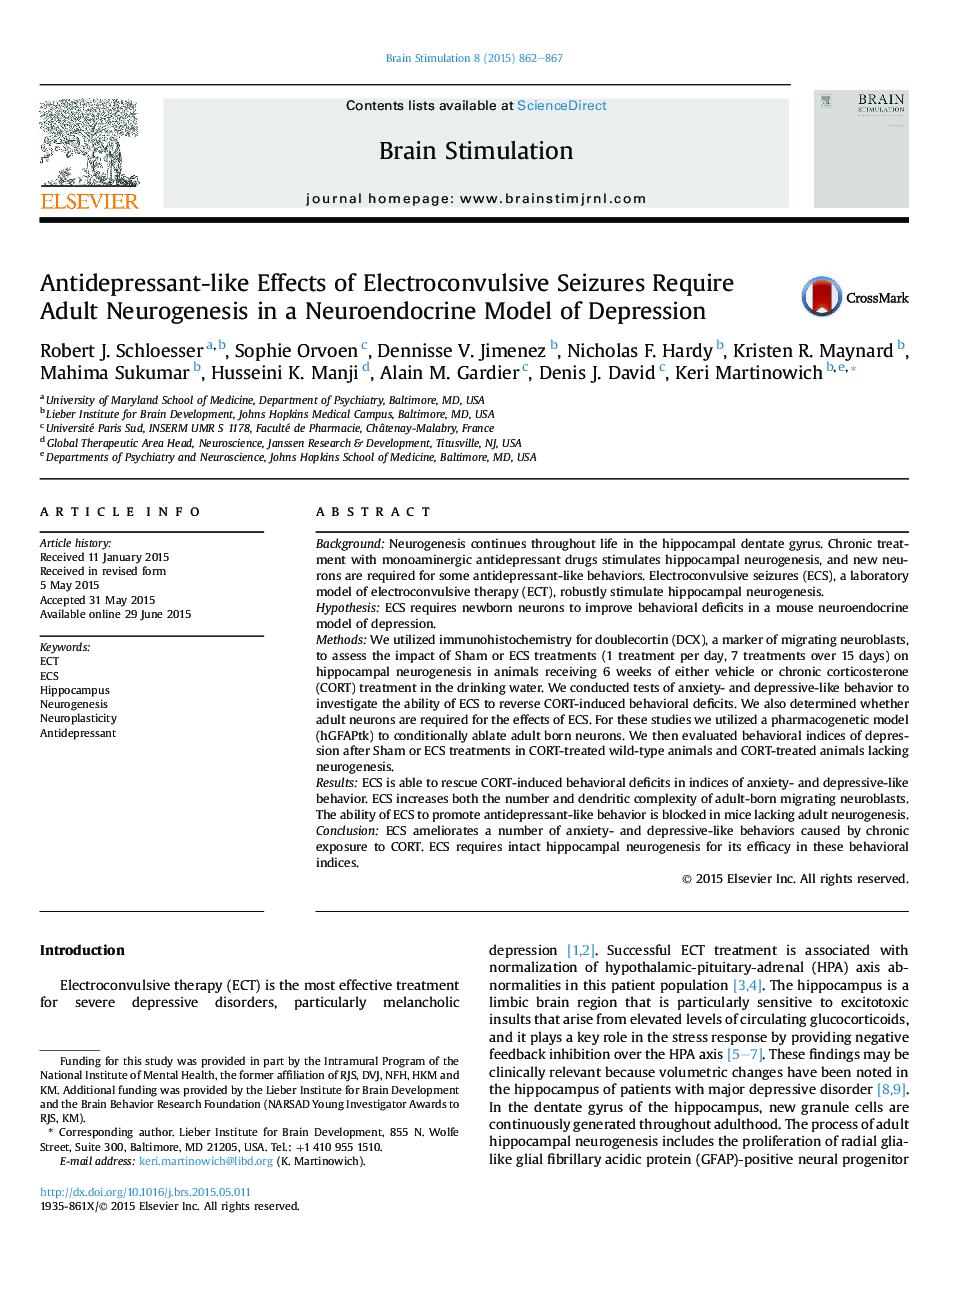 Antidepressant-like Effects of Electroconvulsive Seizures Require Adult Neurogenesis in a Neuroendocrine Model of Depression